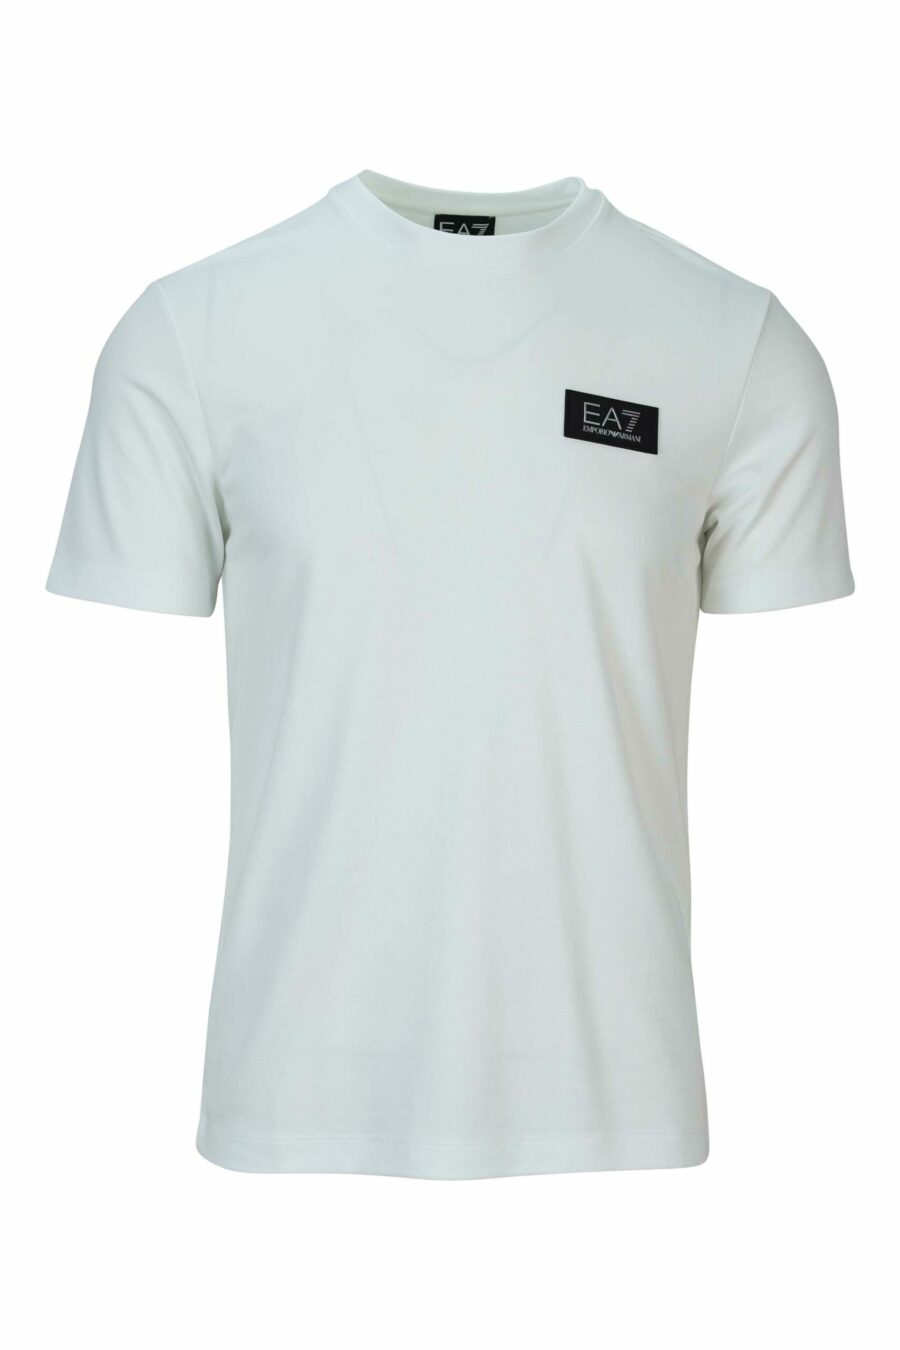 Camiseta blanca "oversize" con minilogo "lux identity" blanco en placa negra - 8058947508495 scaled